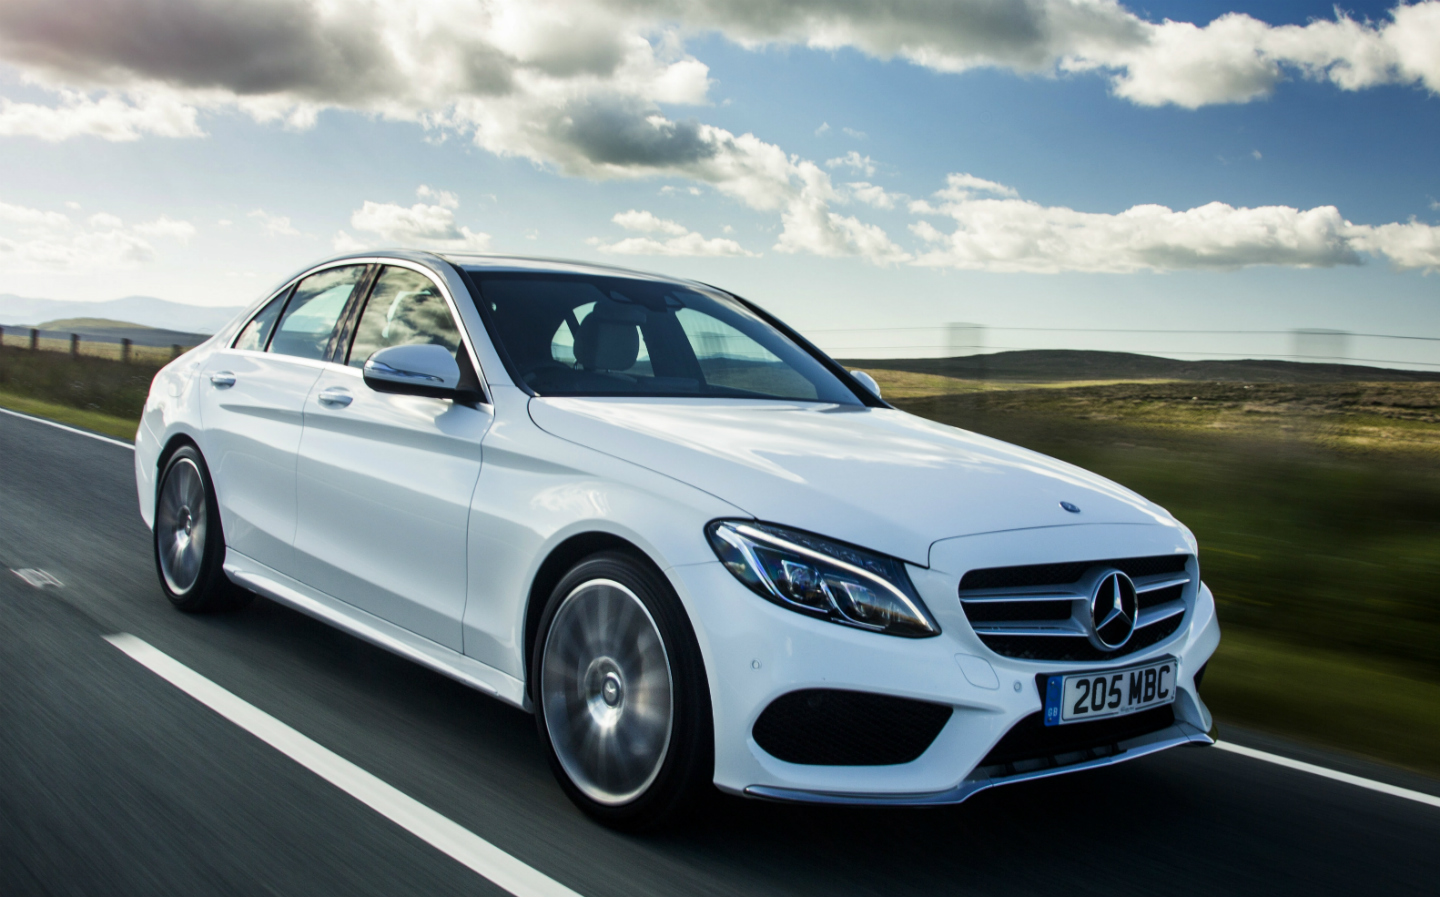 Mercedes airbag recall involves 400,000 British cars